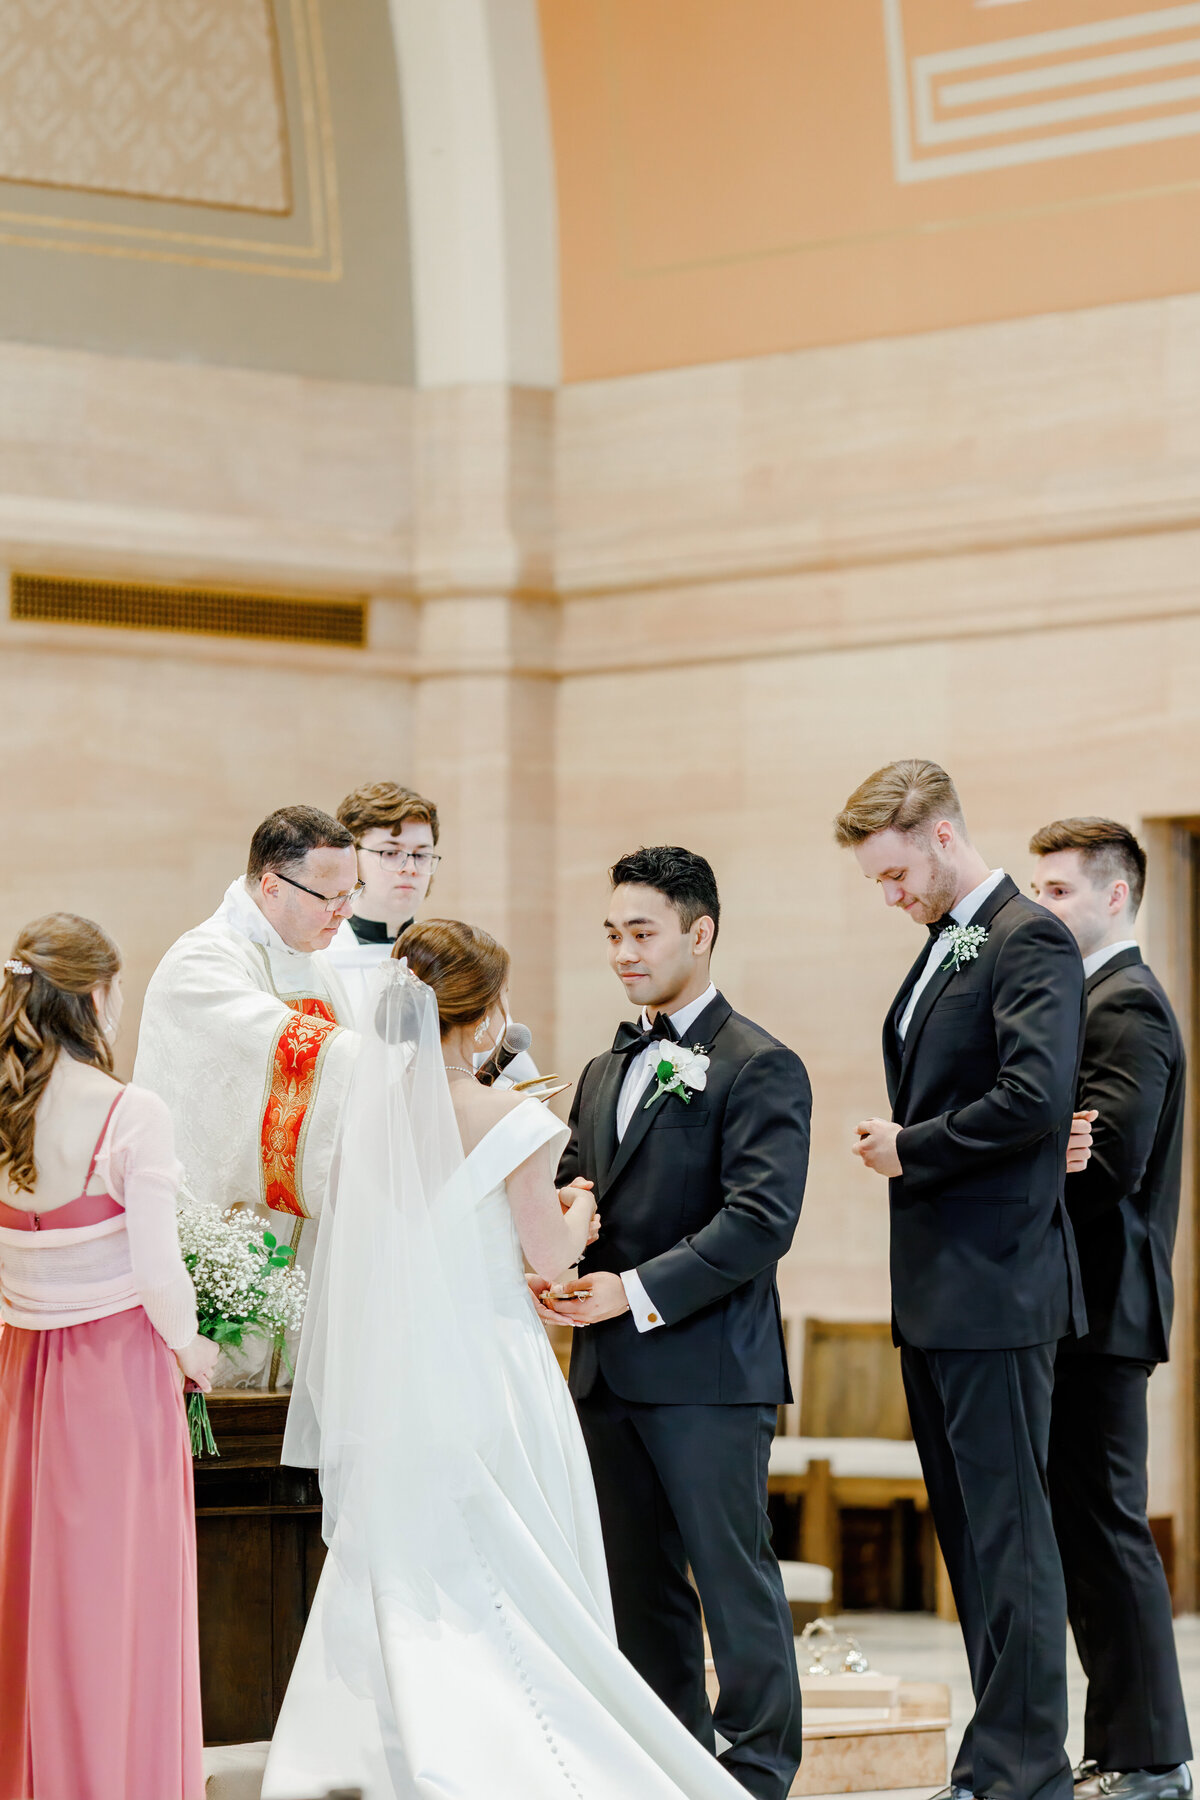 Saint-Charles-Borromeo-Catholic-Church-Wedding-Minnesota6